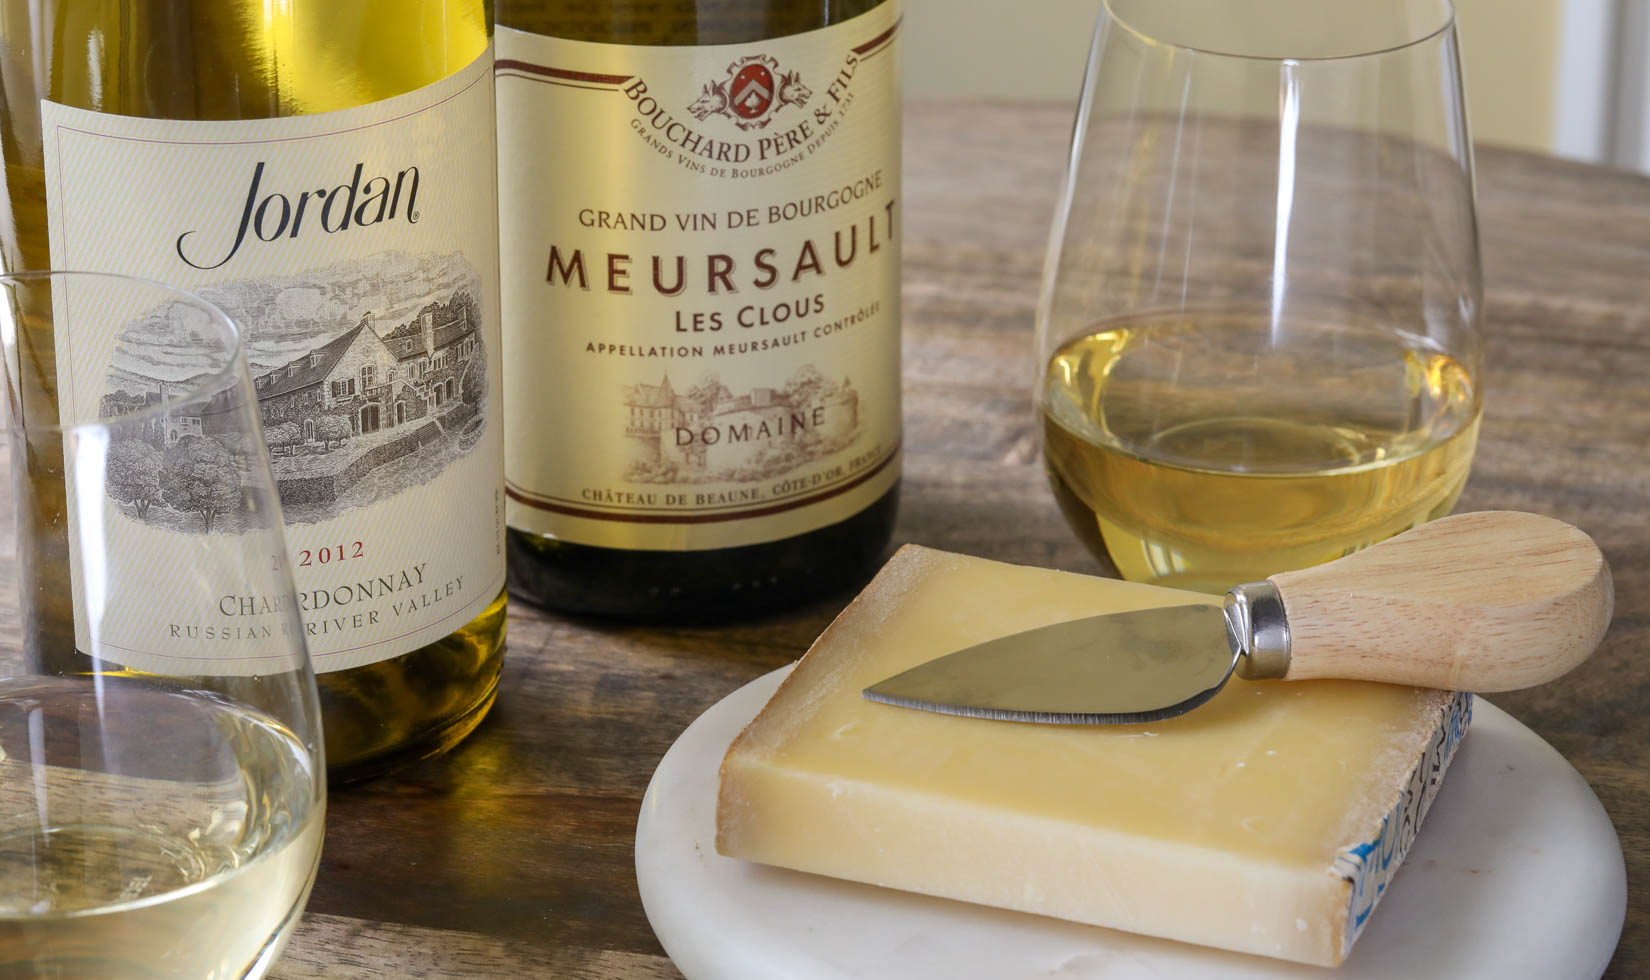 chardonnay cheese pairing tips